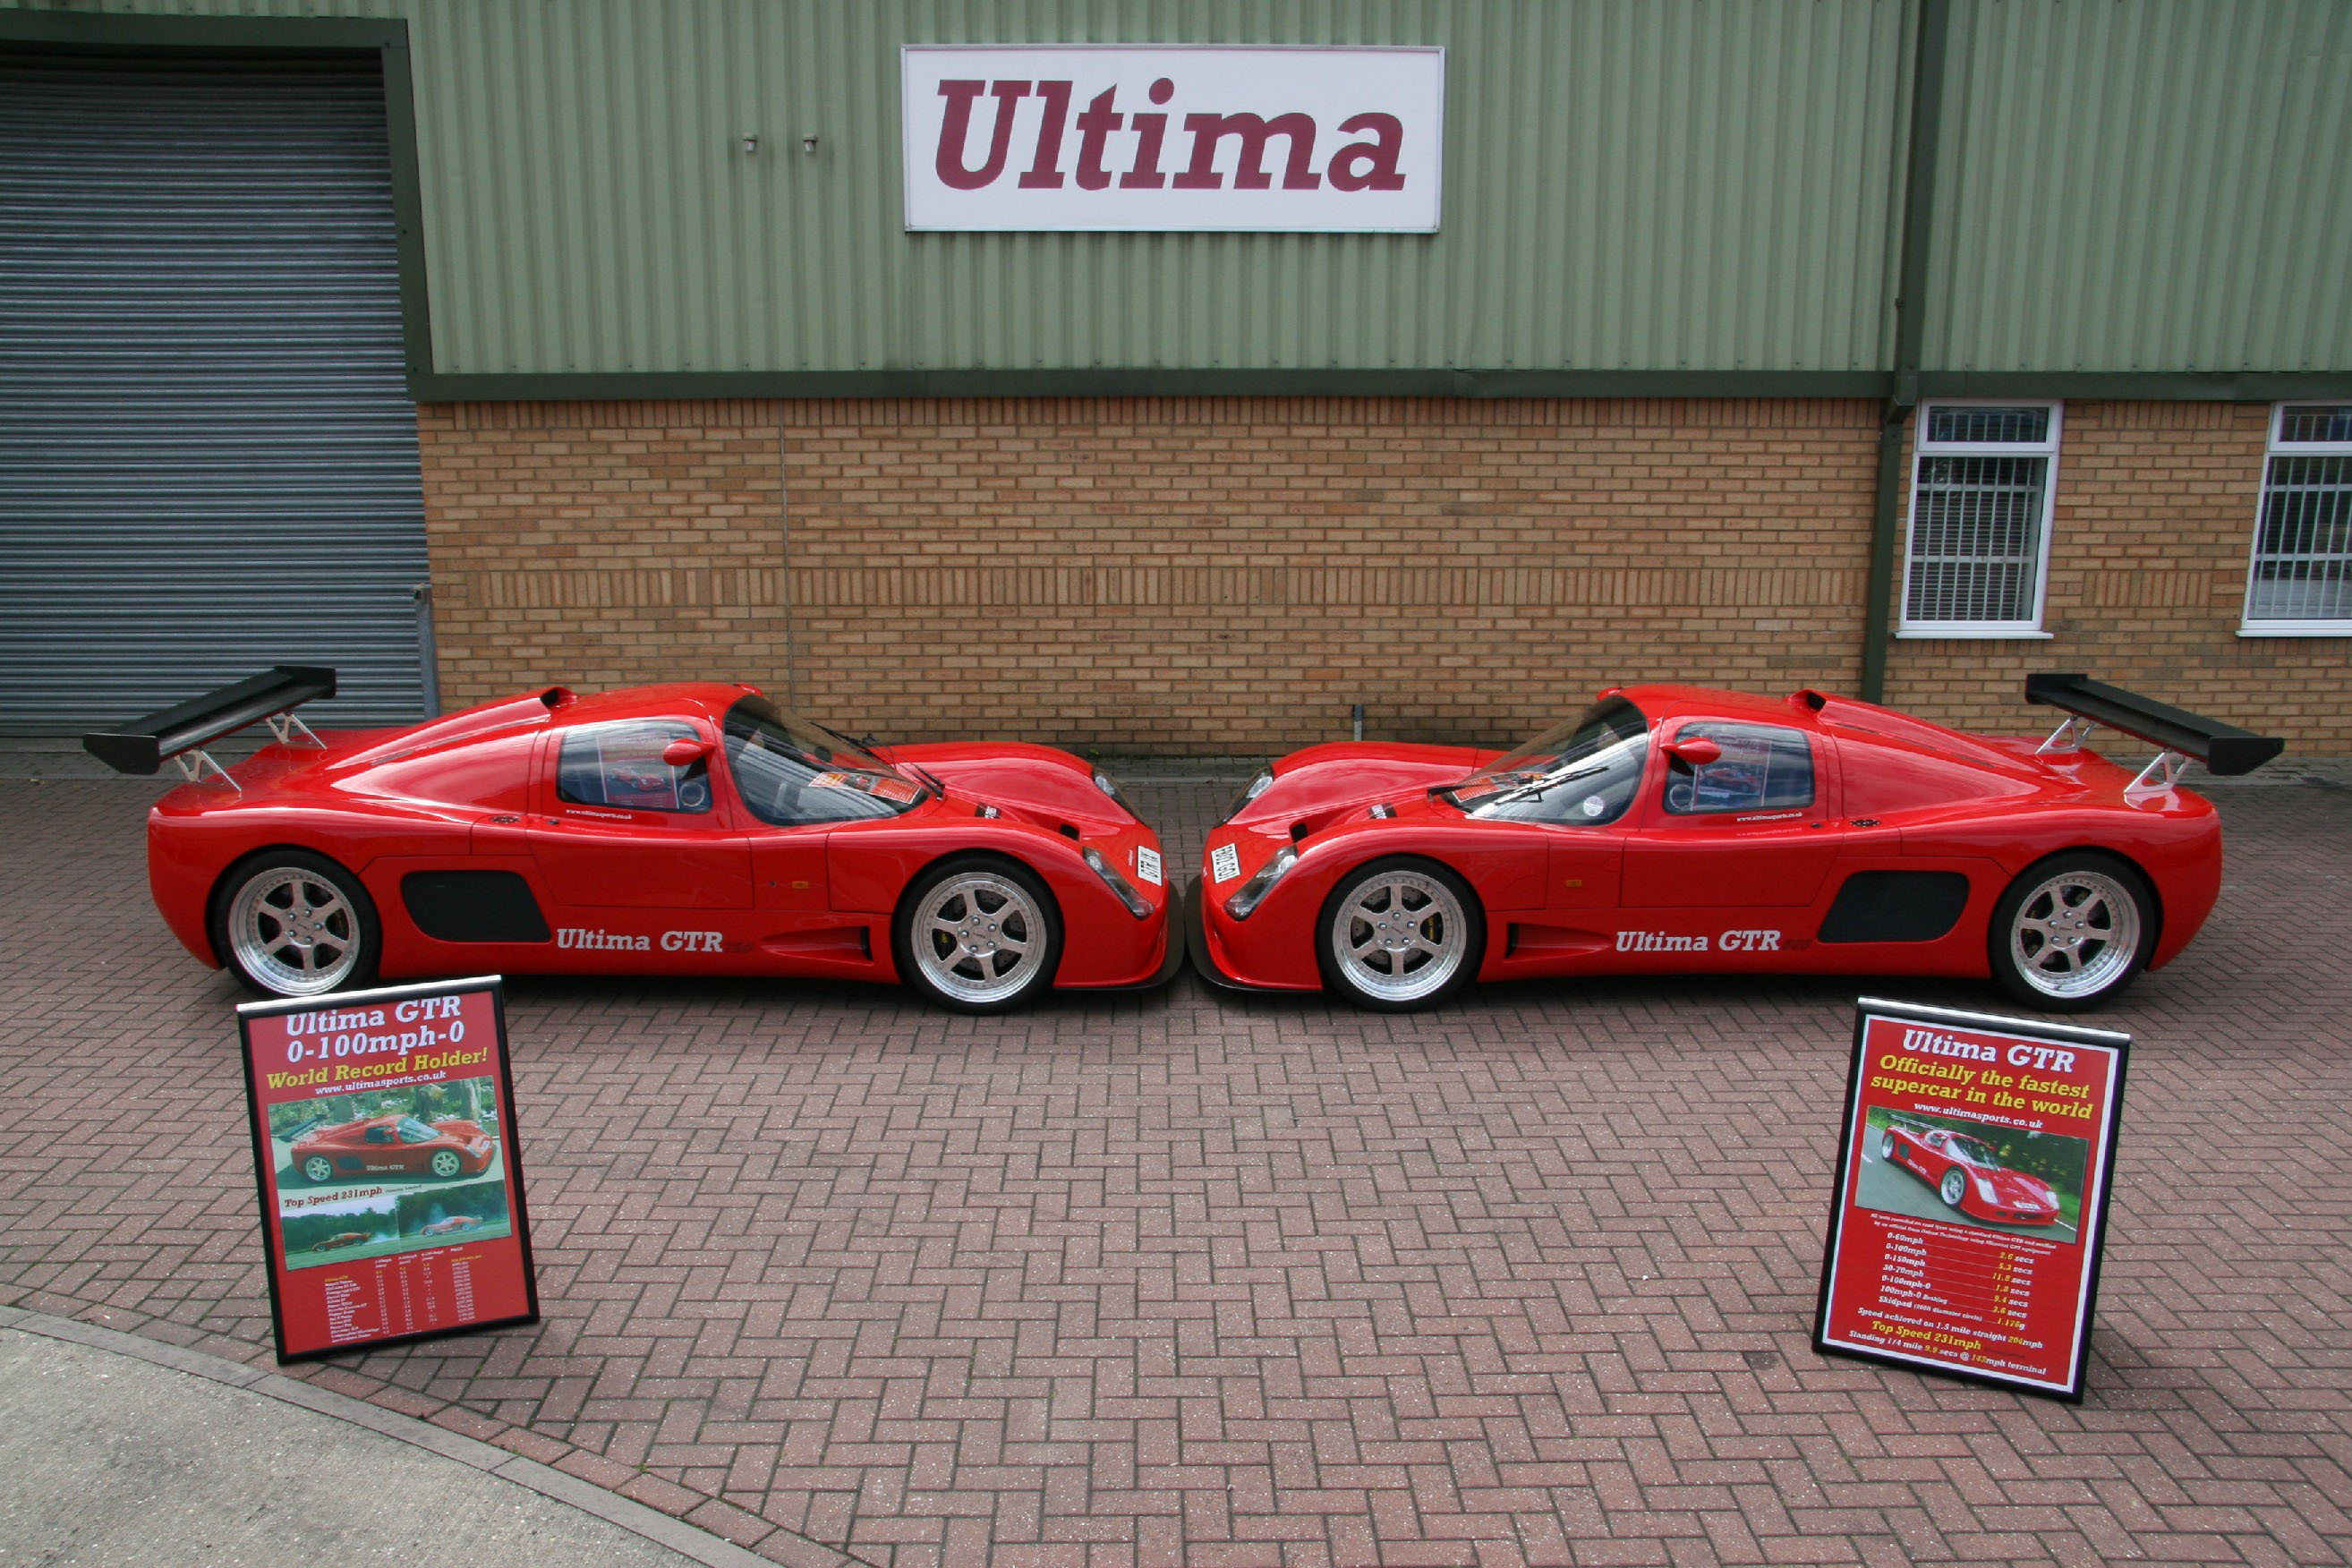 The Ultima GTR